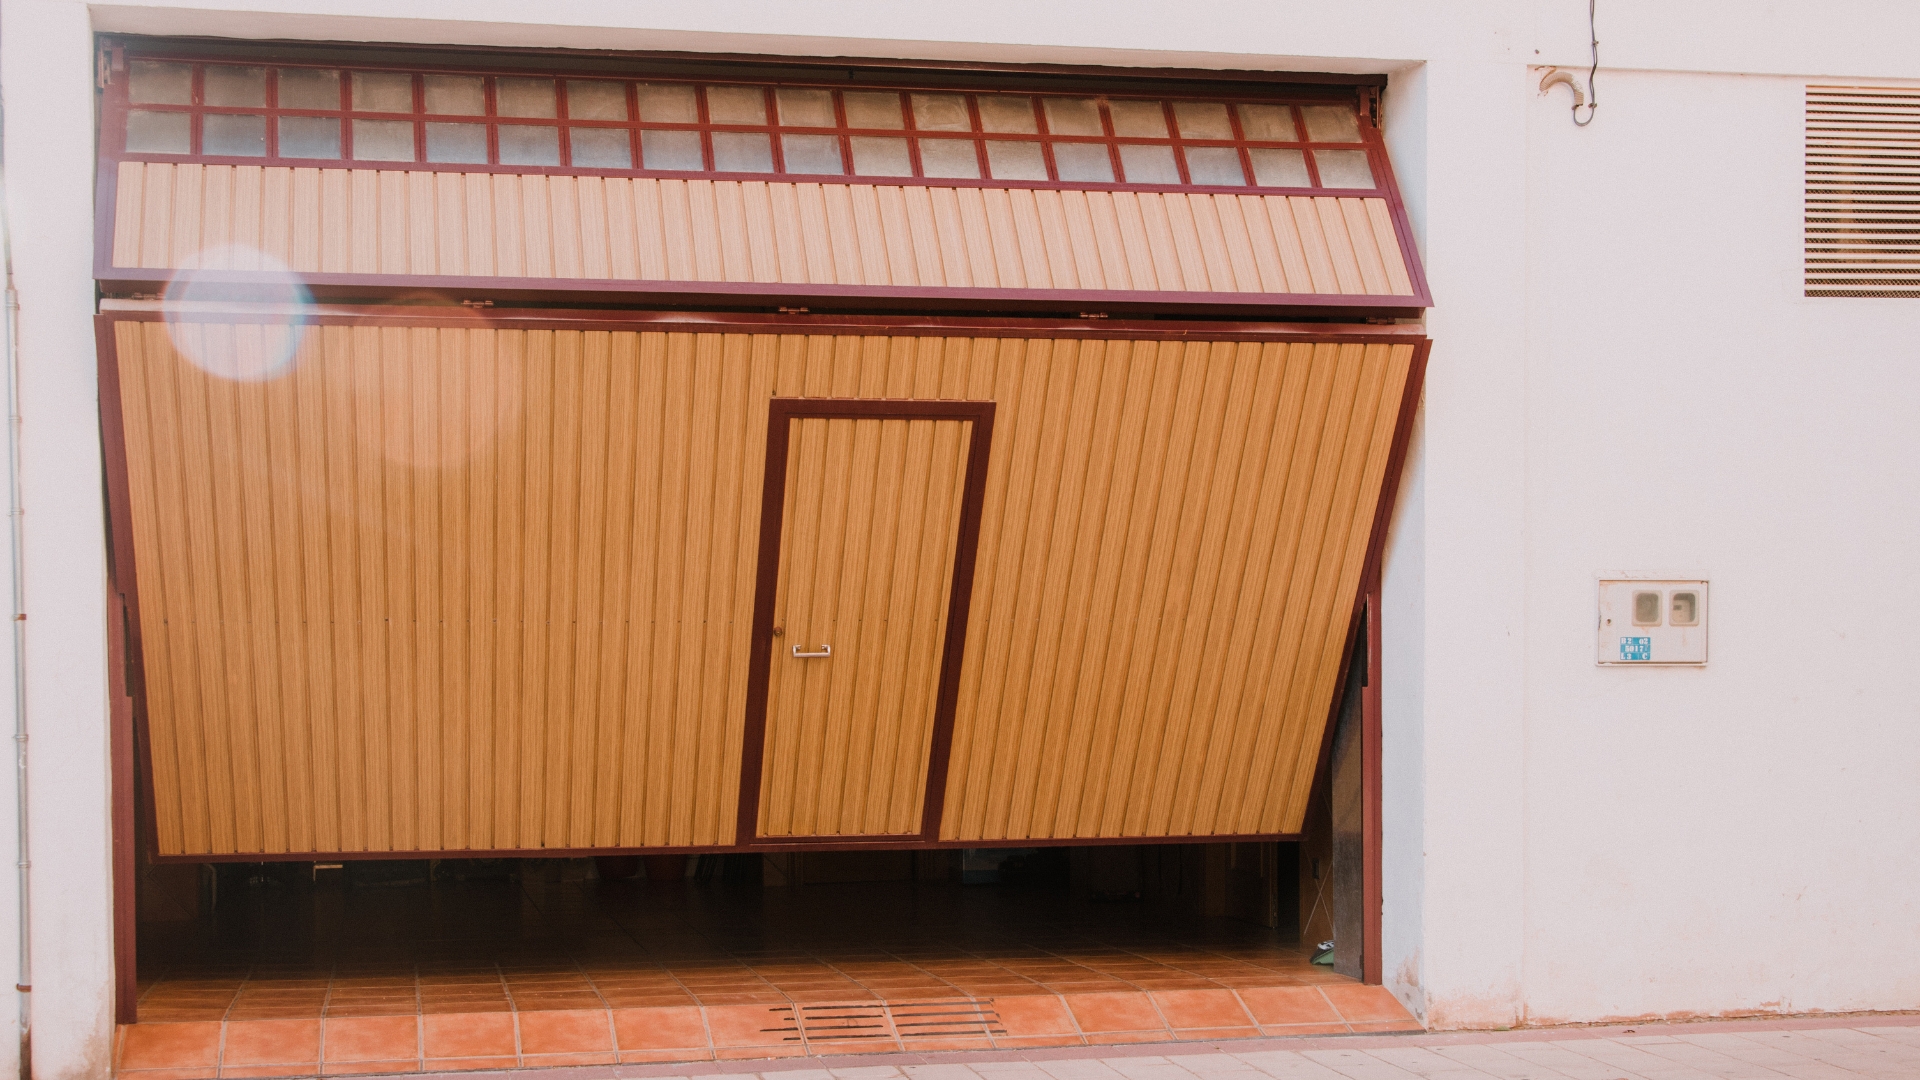 A tilt-up garage door